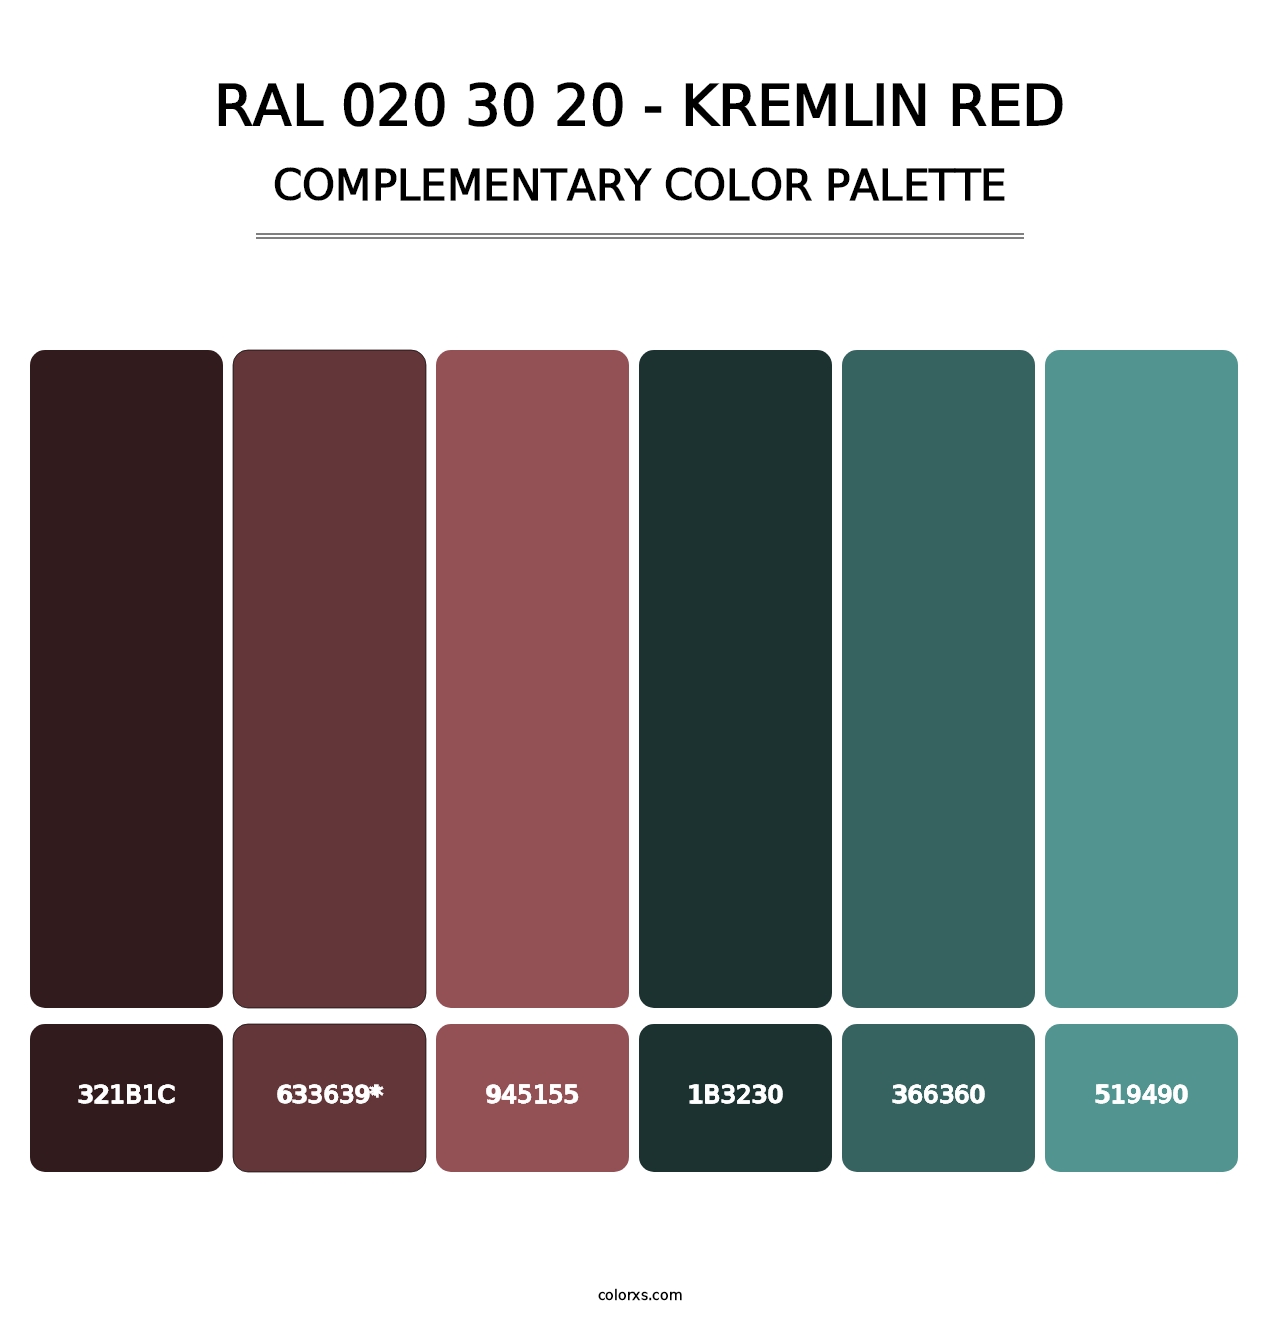 RAL 020 30 20 - Kremlin Red - Complementary Color Palette